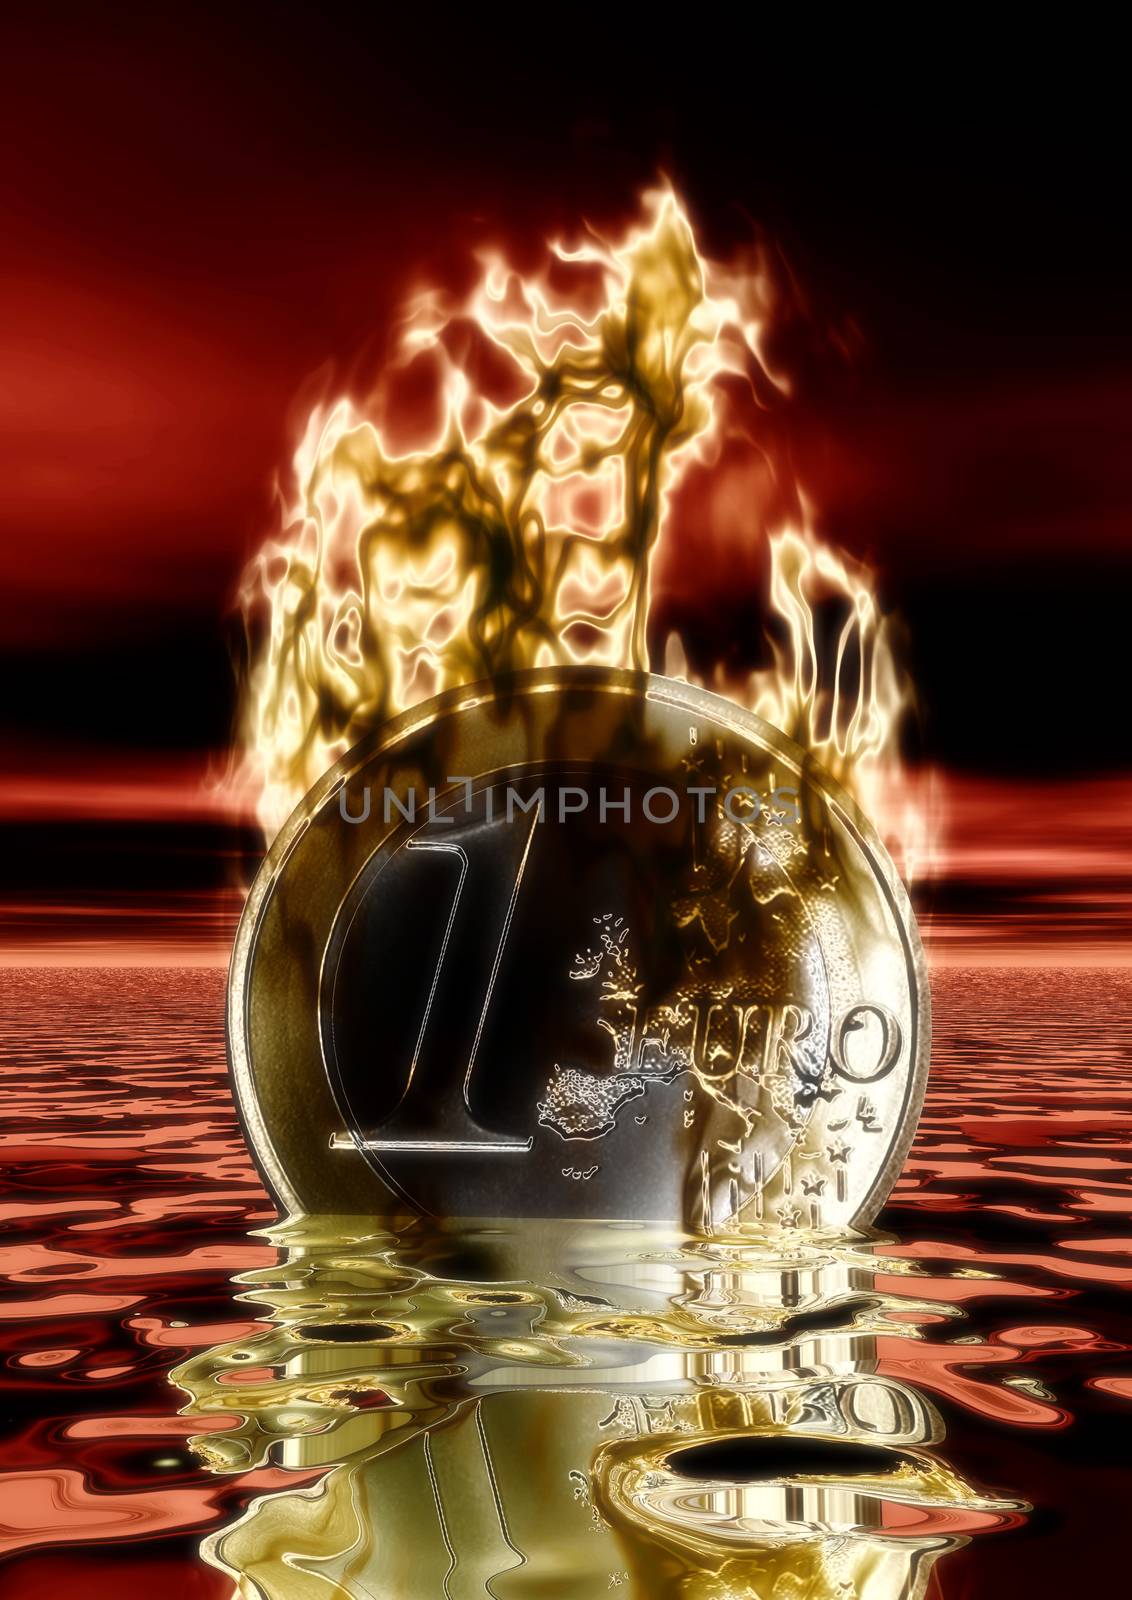 Digital Visualization of a burning Euro by 3quarks